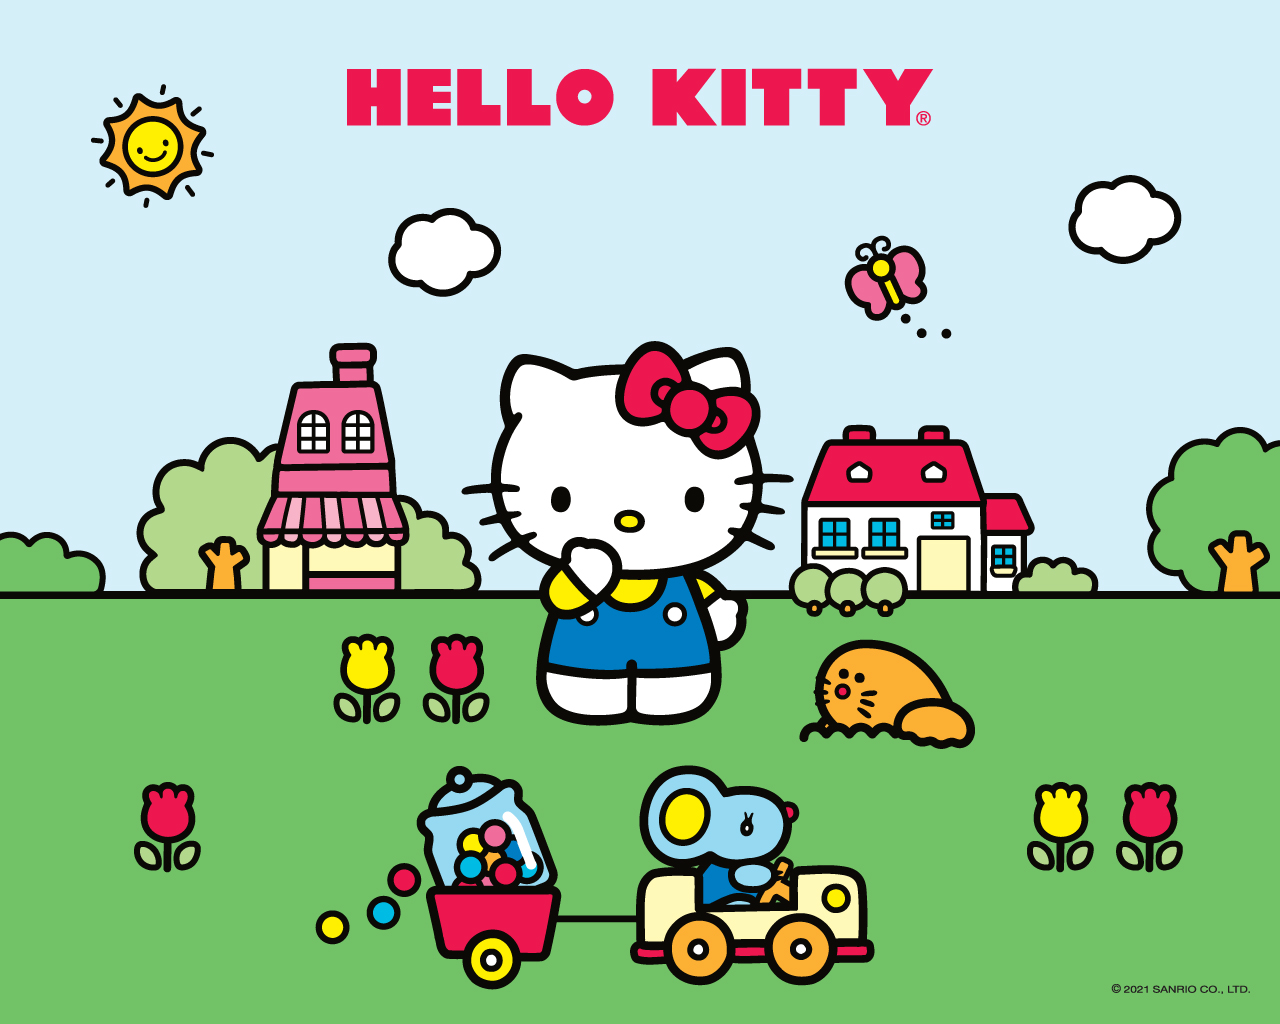 Sanrio pretende ir além da Hello Kitty